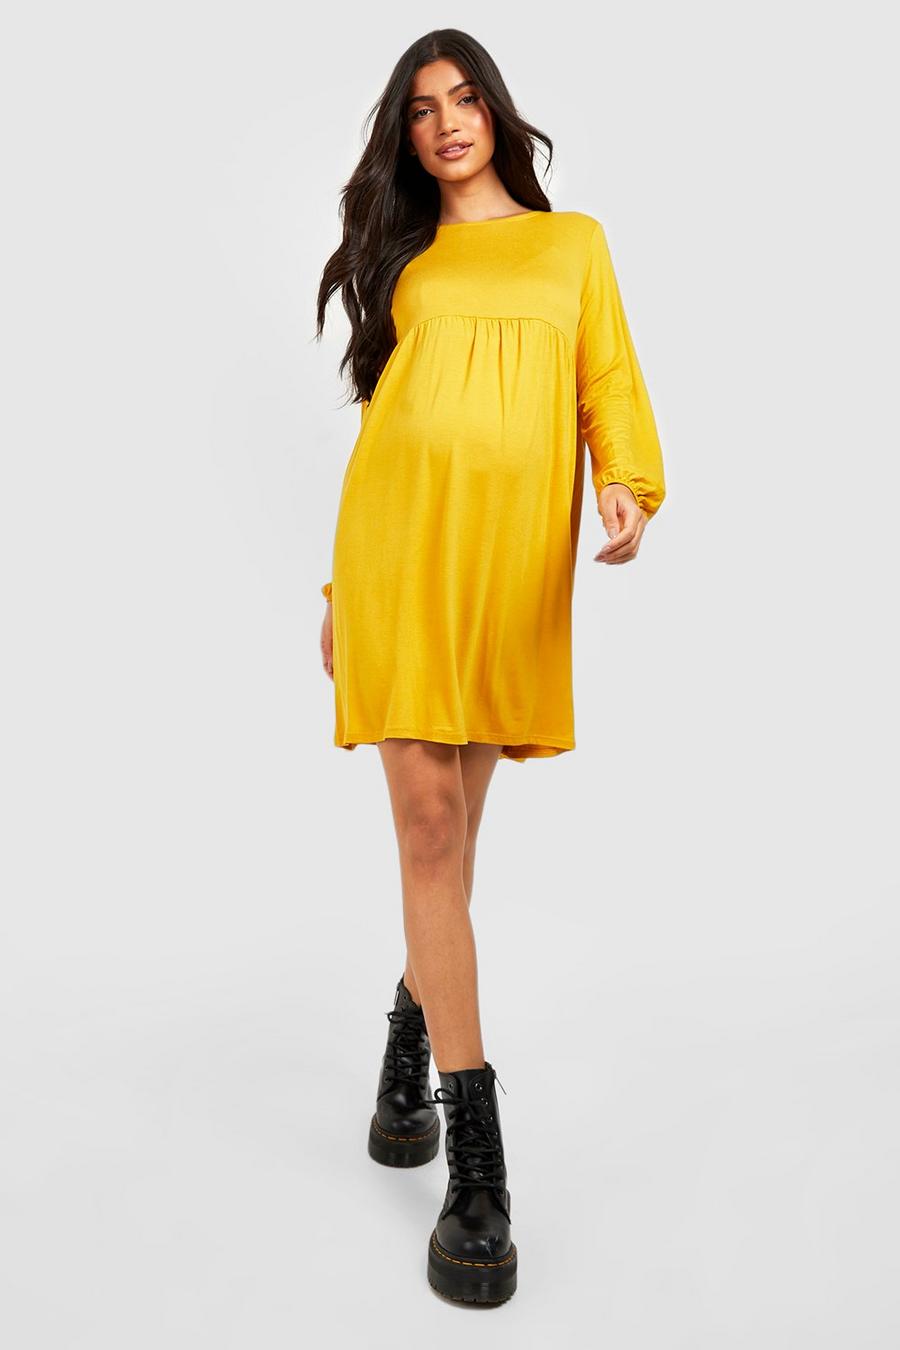 Mustard yellow Maternity Smock Dress